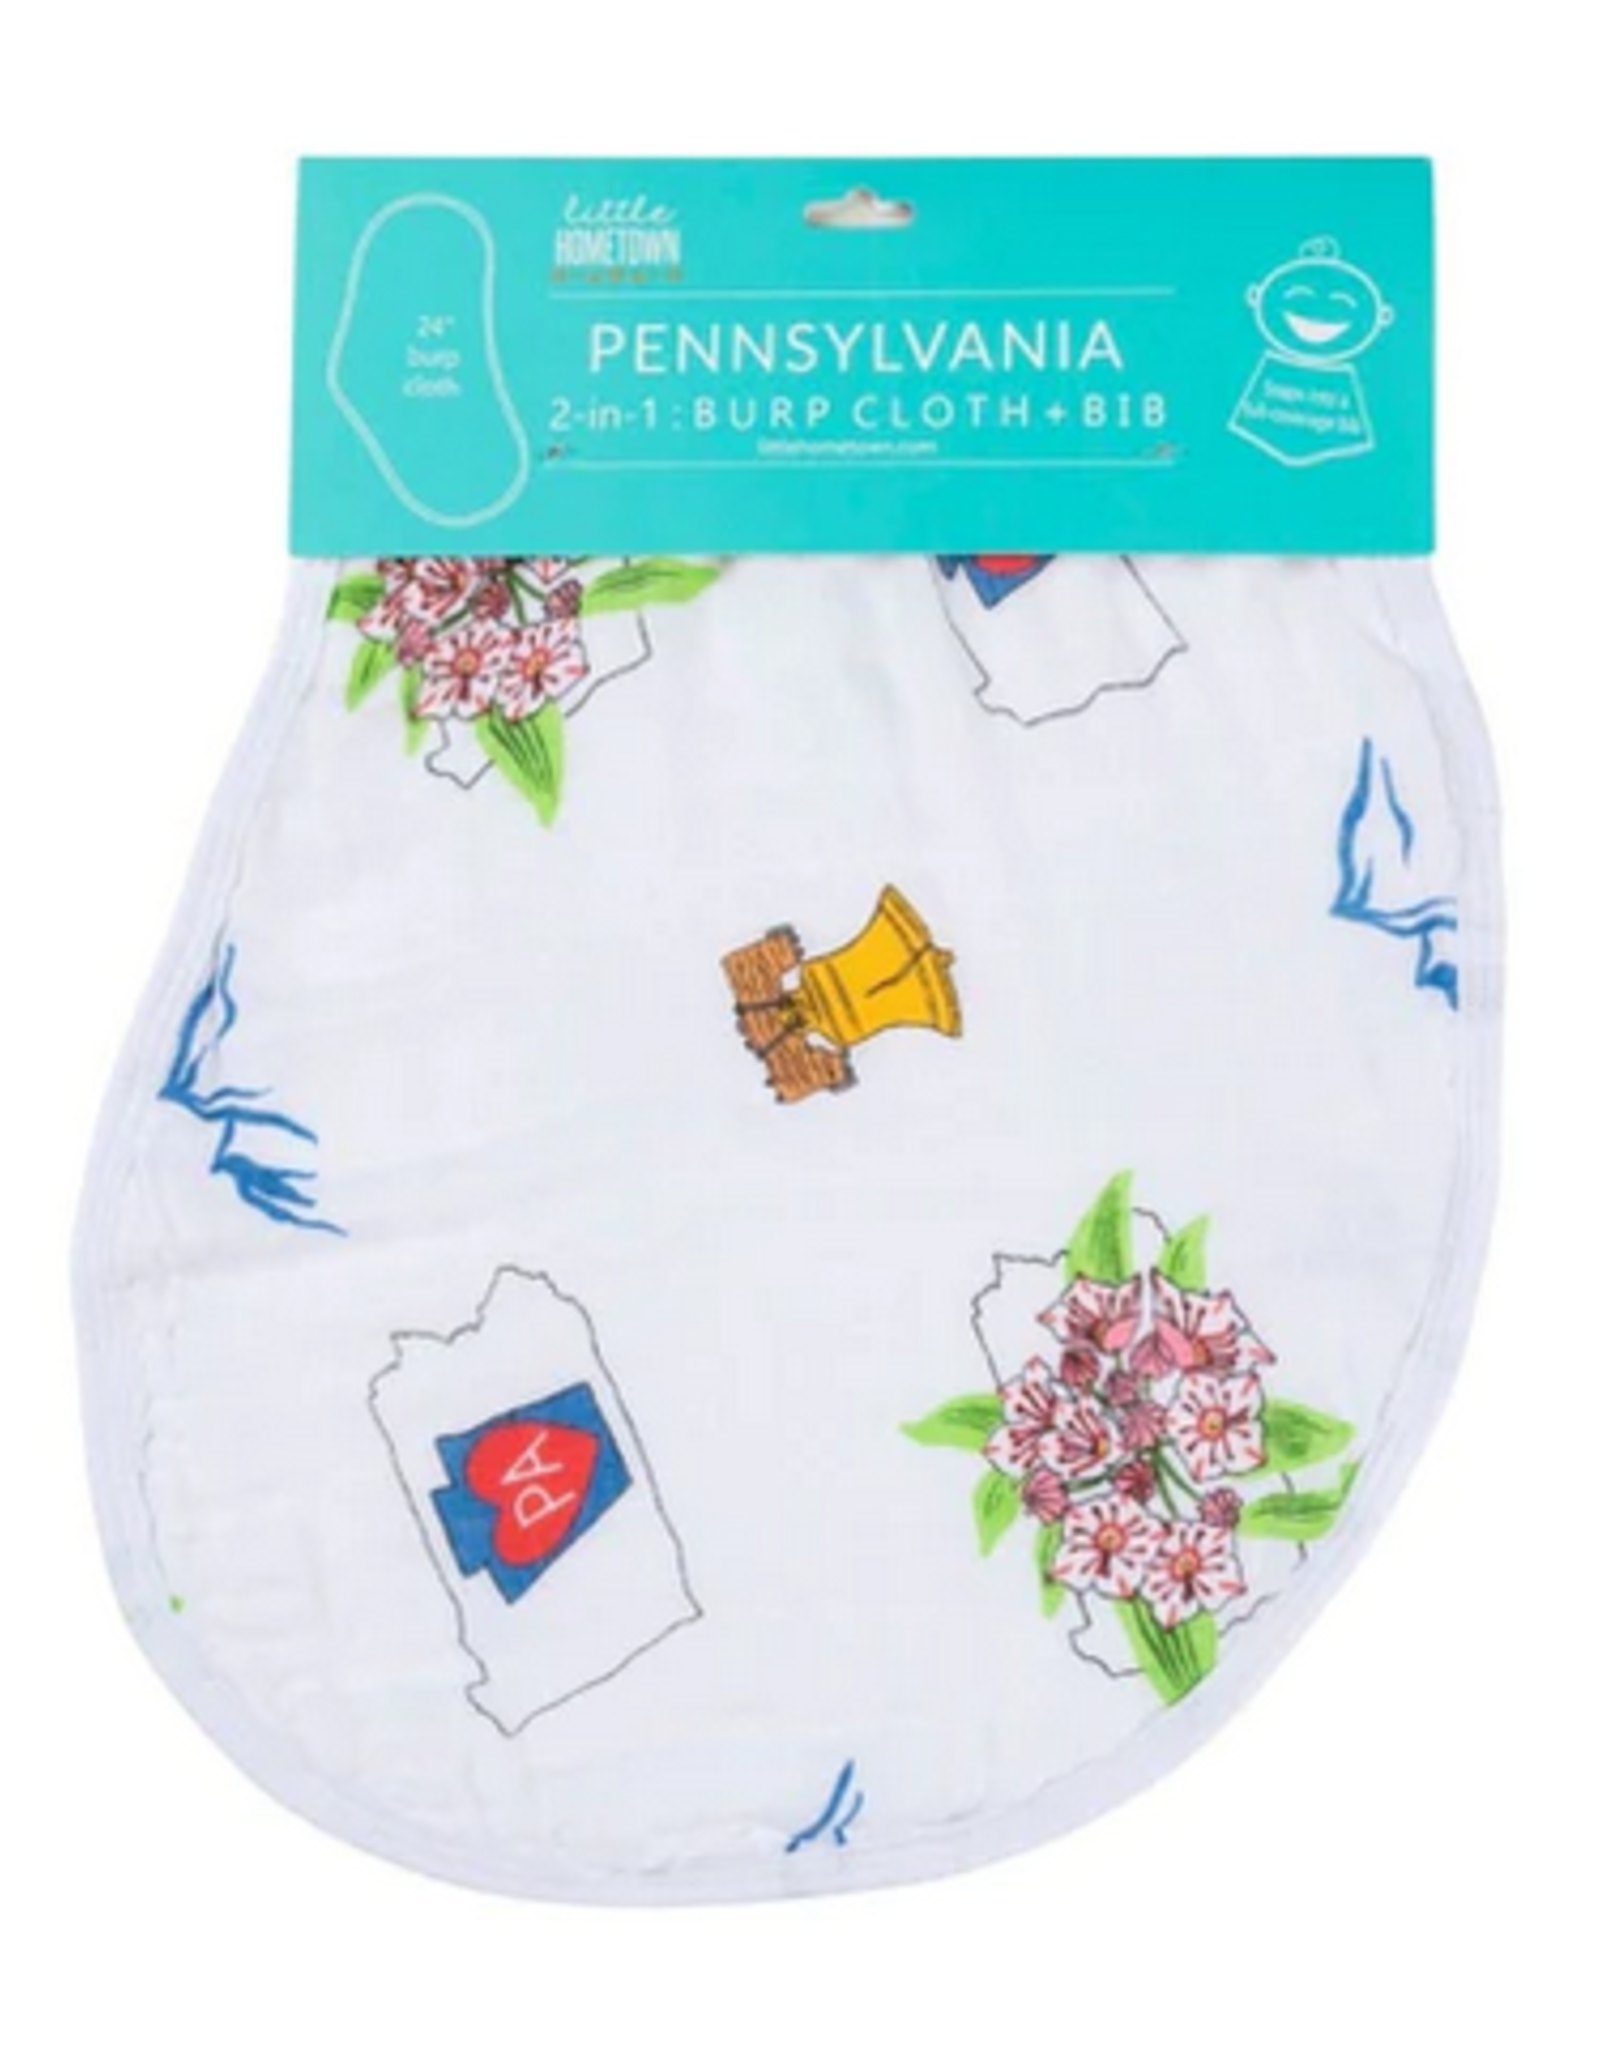 Little Hometown Pennsylvania Baby: 2-in-1 Burp Cloth and Bib